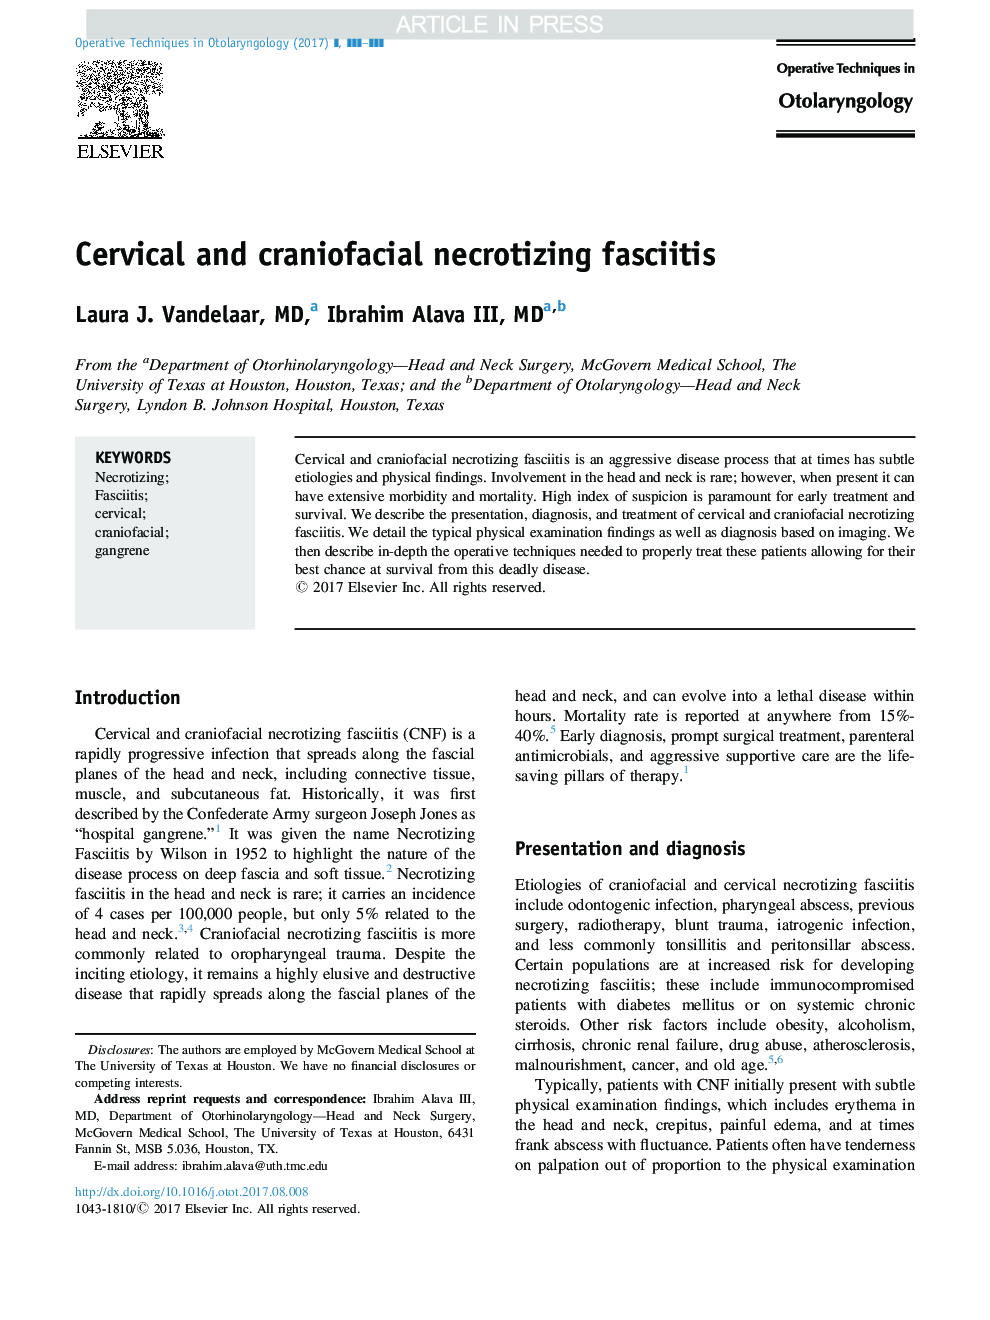 Cervical and craniofacial necrotizing fasciitis